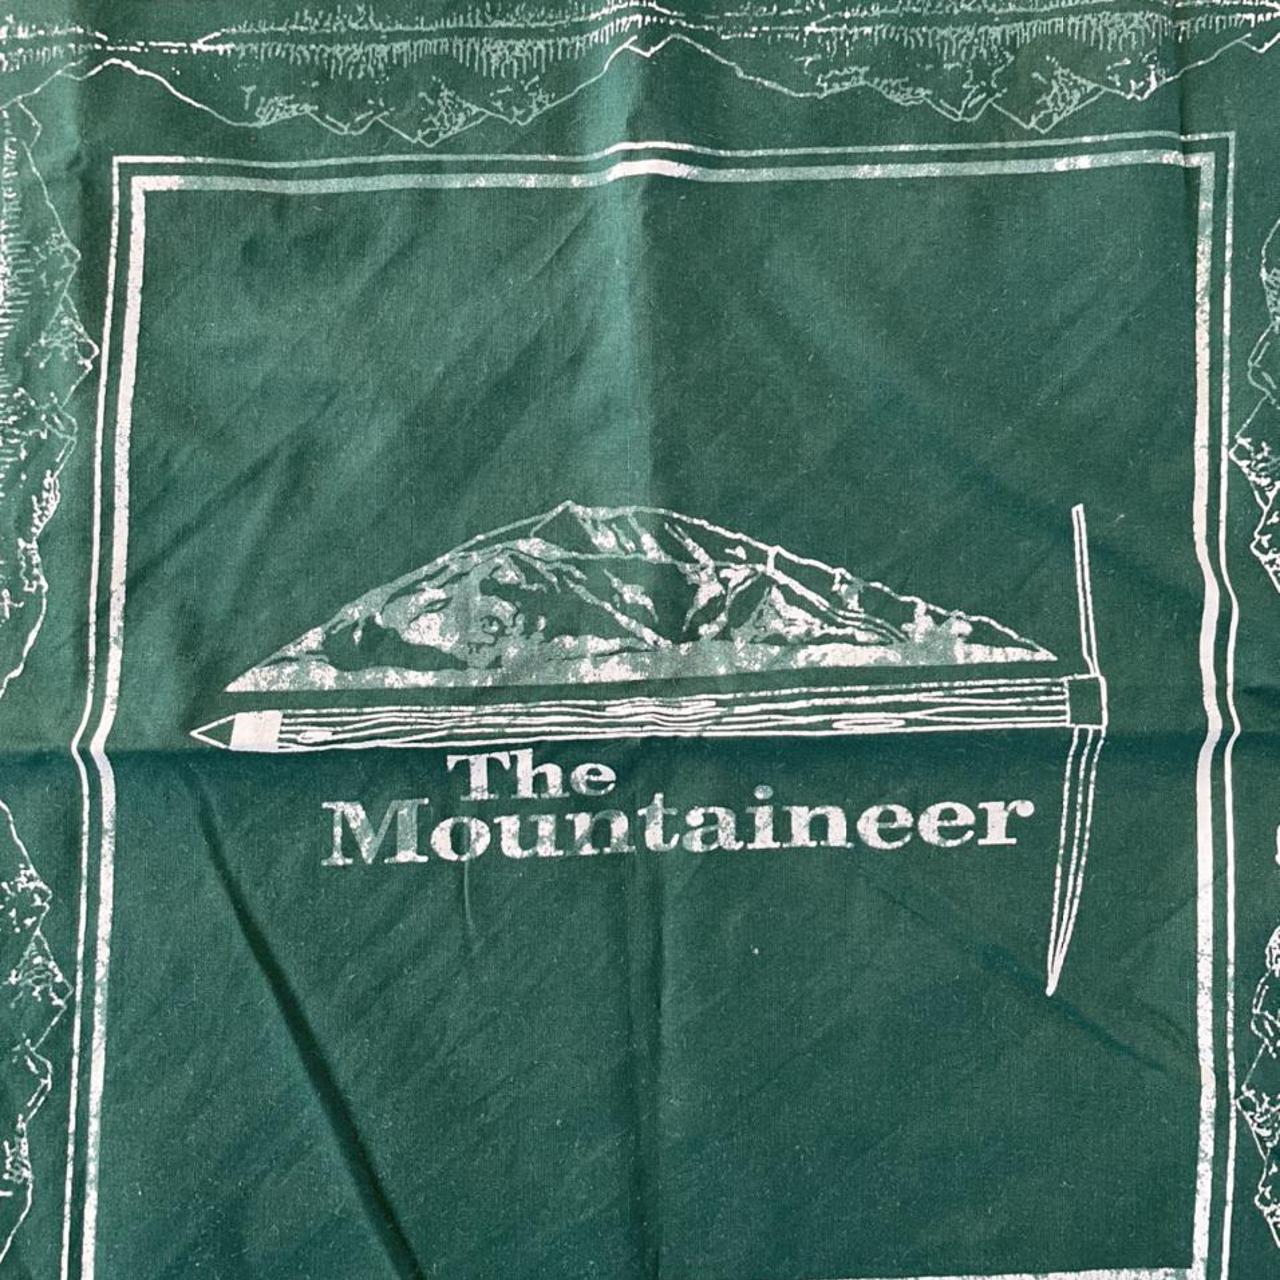 Product Image 2 - Vintage The Mountaineer bandana green